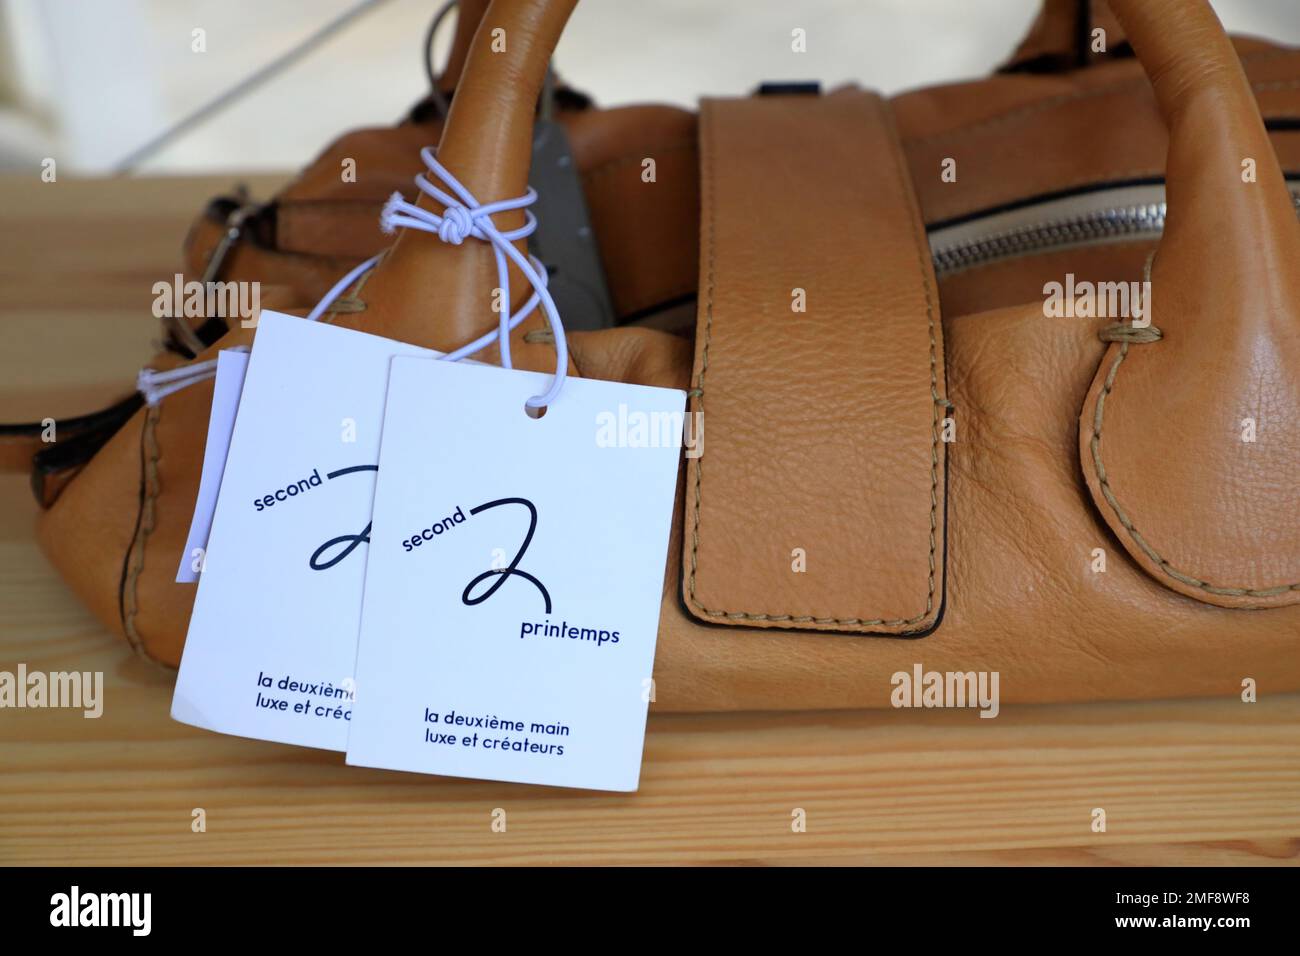 A vintage handbag with Second 2 Printemps tag for sale in 2e Printemps (Second Printemps) store at 7ieme Ciel (Seventh Heaven) in the 7th floor of Au Printemps department store.Paris.France Stock Photo